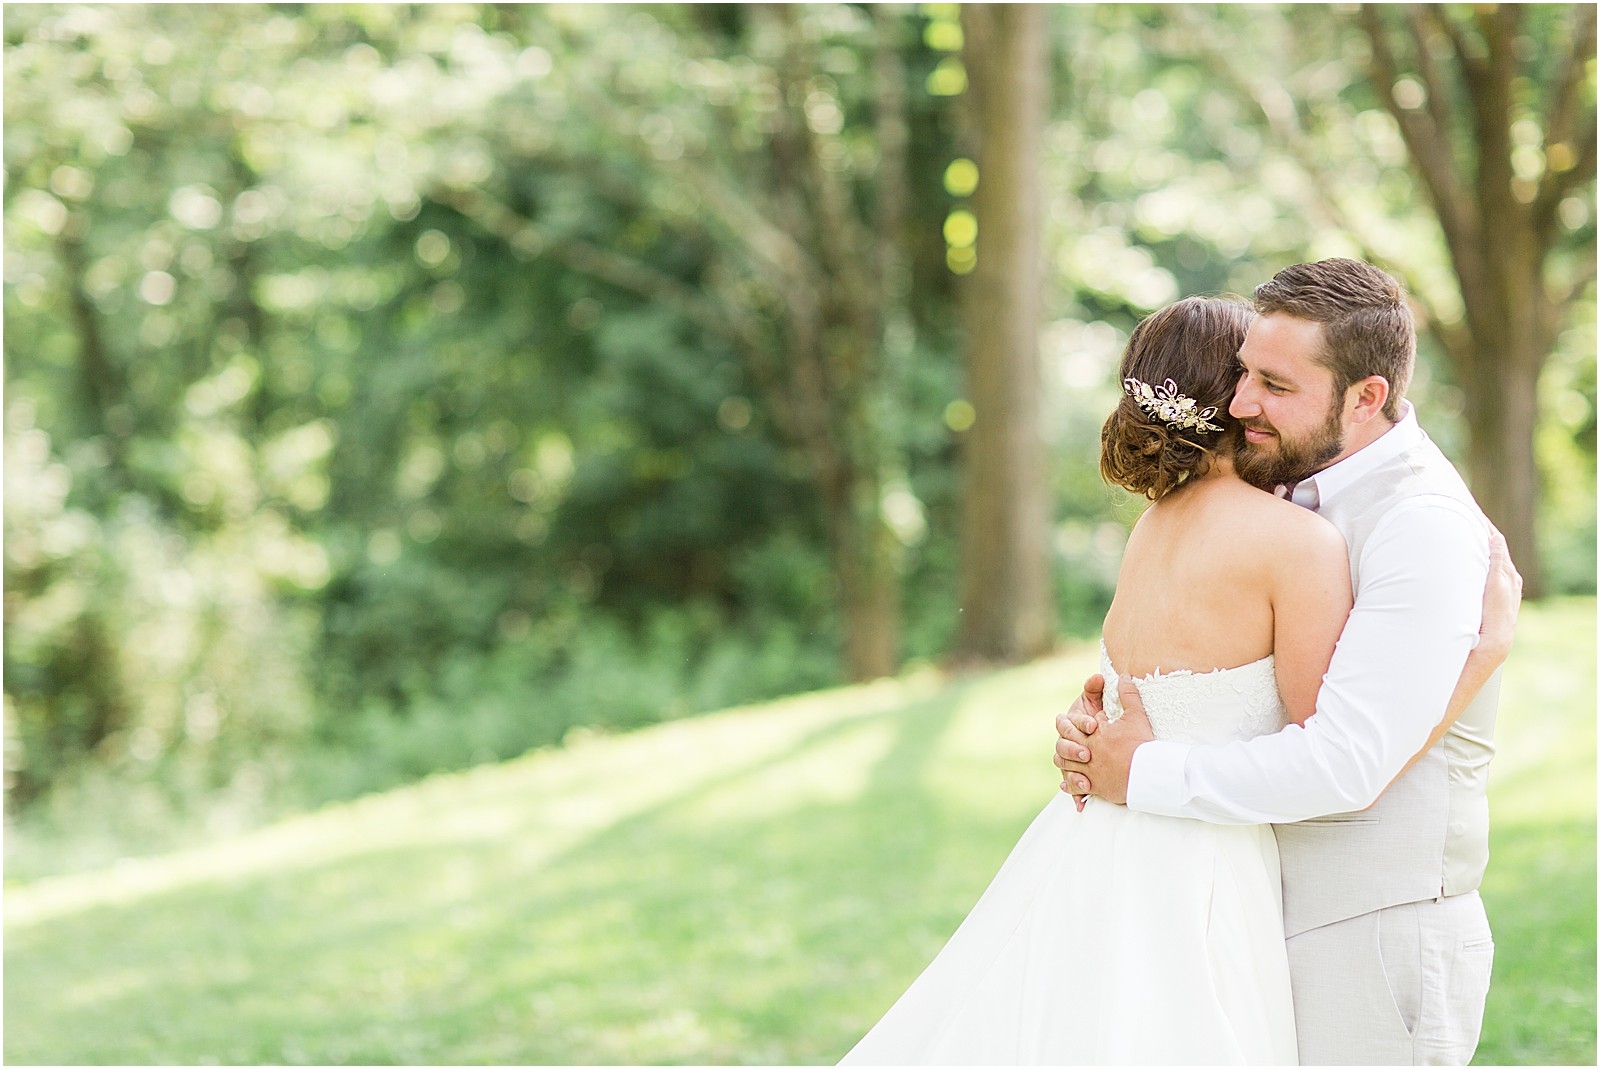 A Evansville Indiana Backyard Wedding | Bailey and Ben 023.jpg